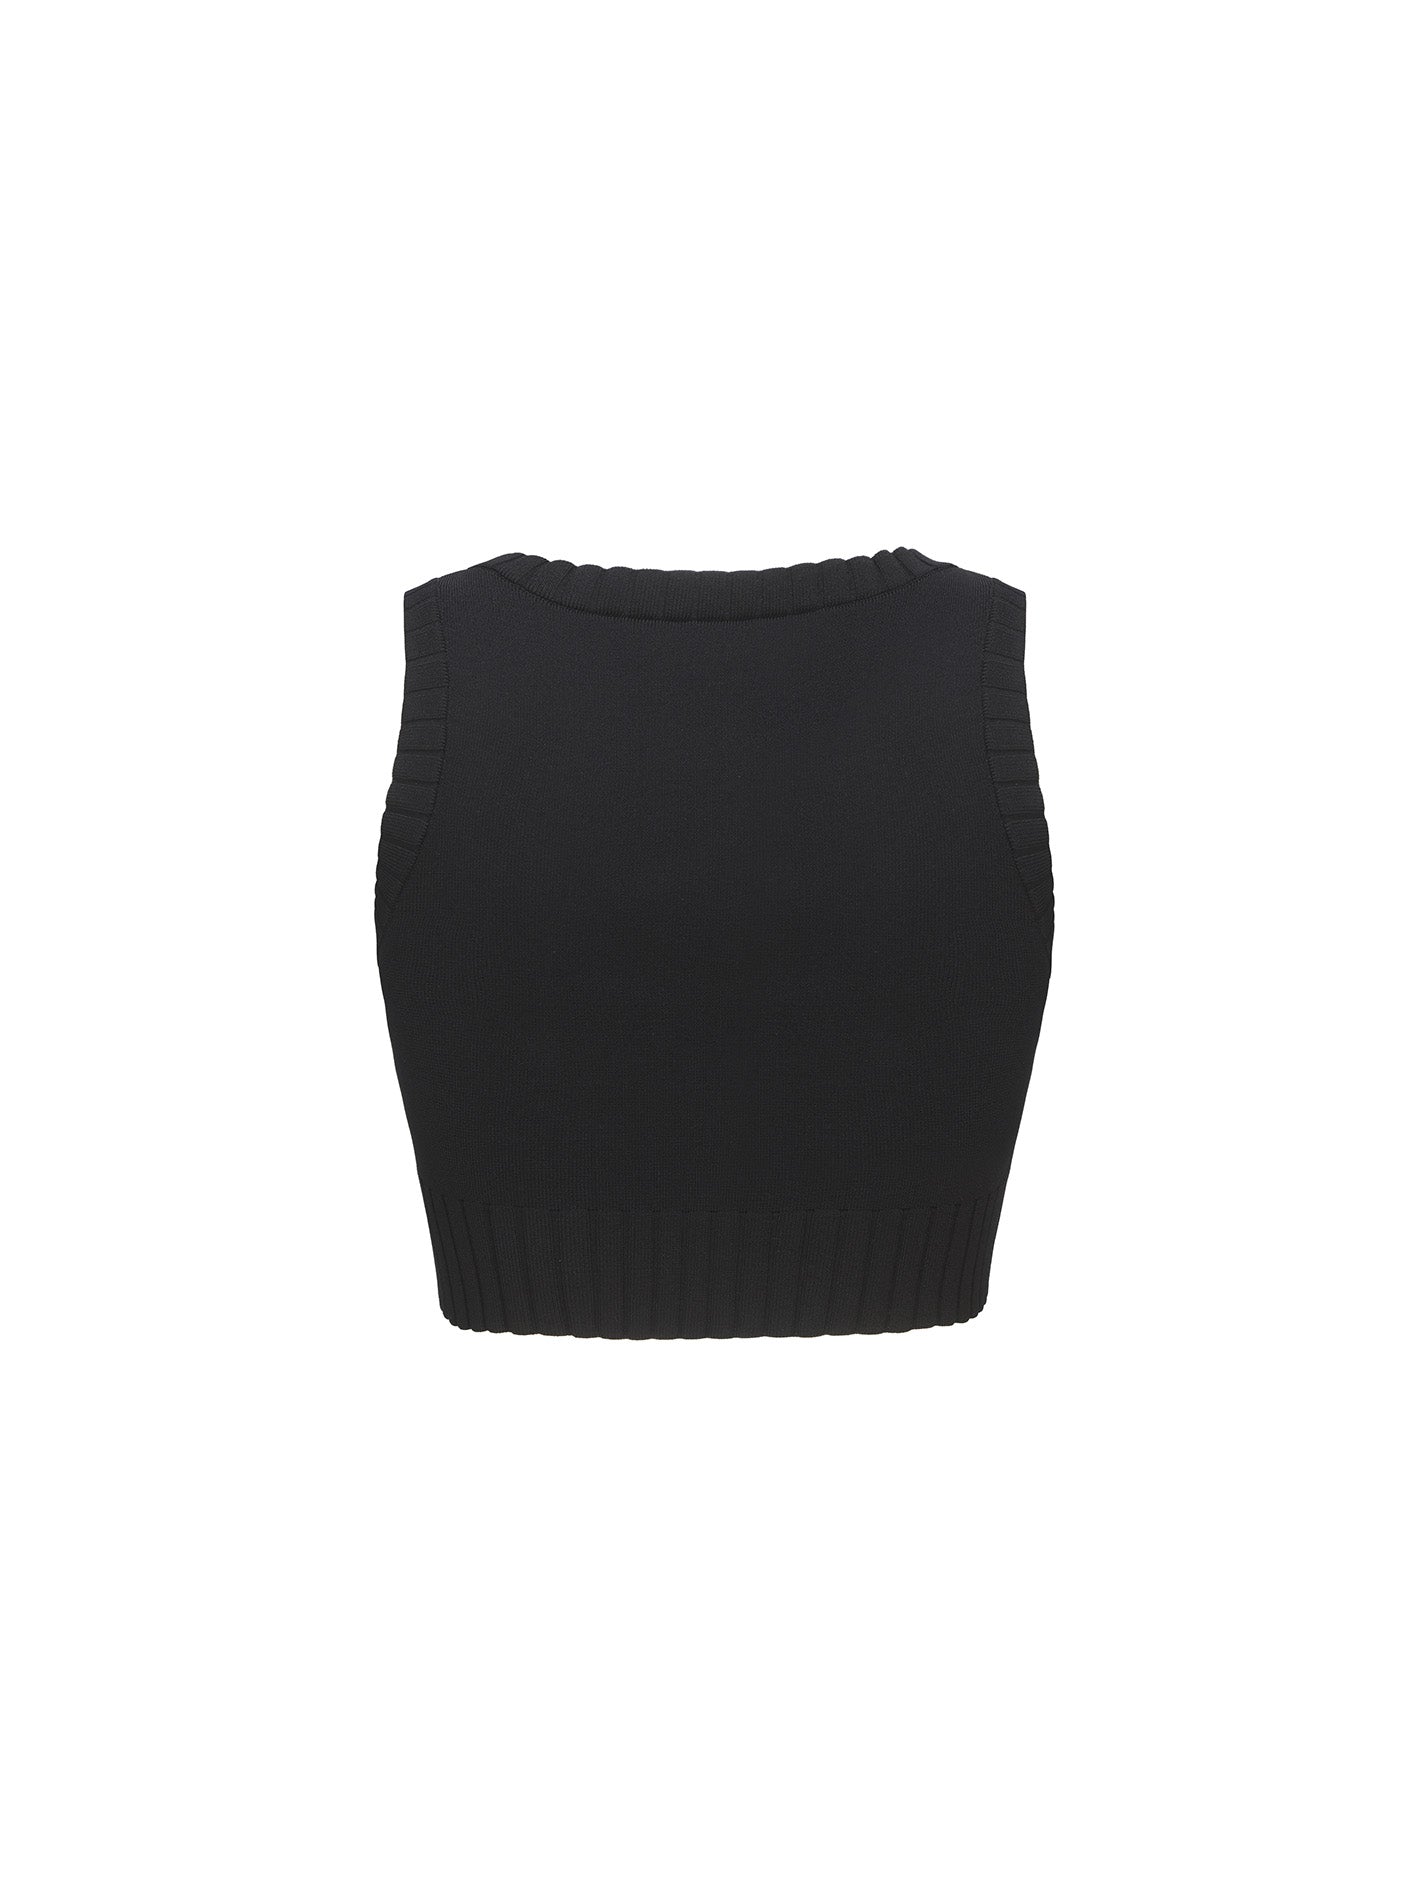 Kennedy Knit Top Set (Black)